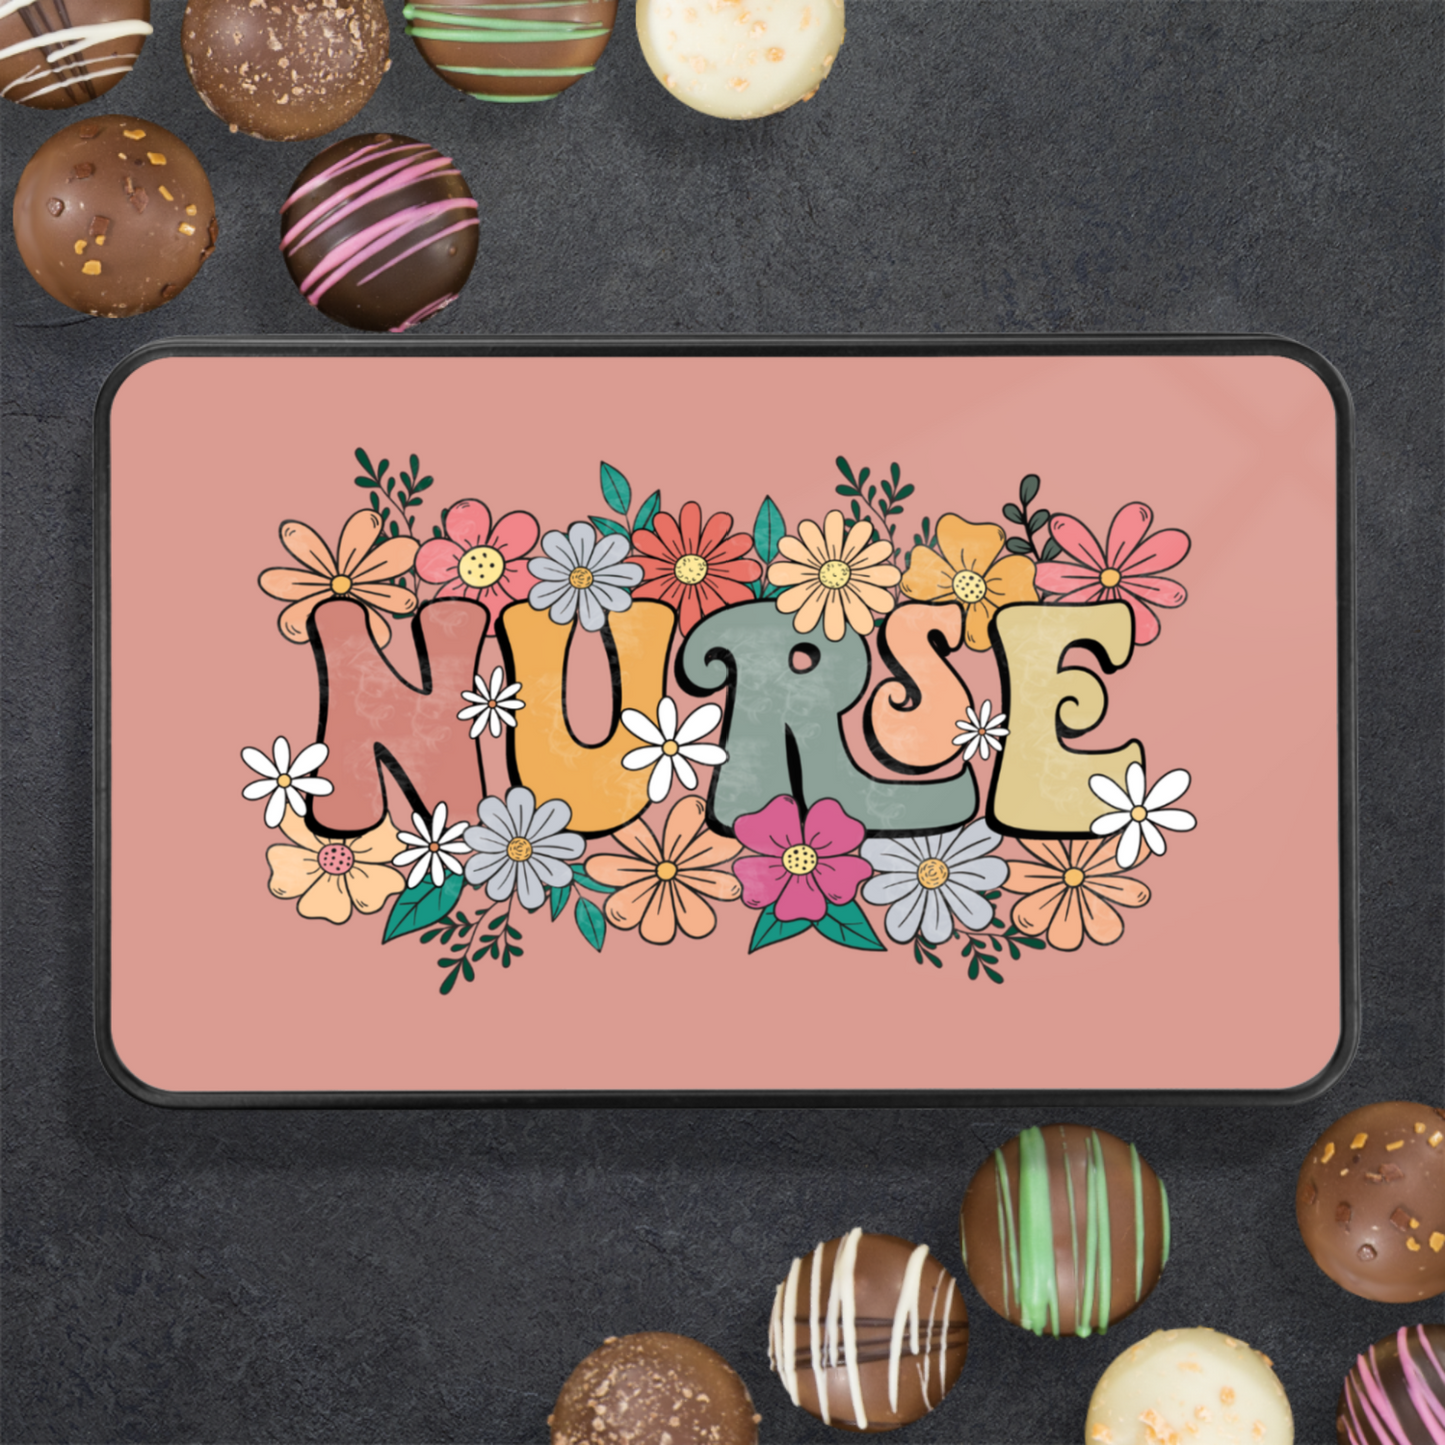 Chocolate Truffles Nurse Appreciation Gift - Gift for Nurse - Nurse Graduation Gift